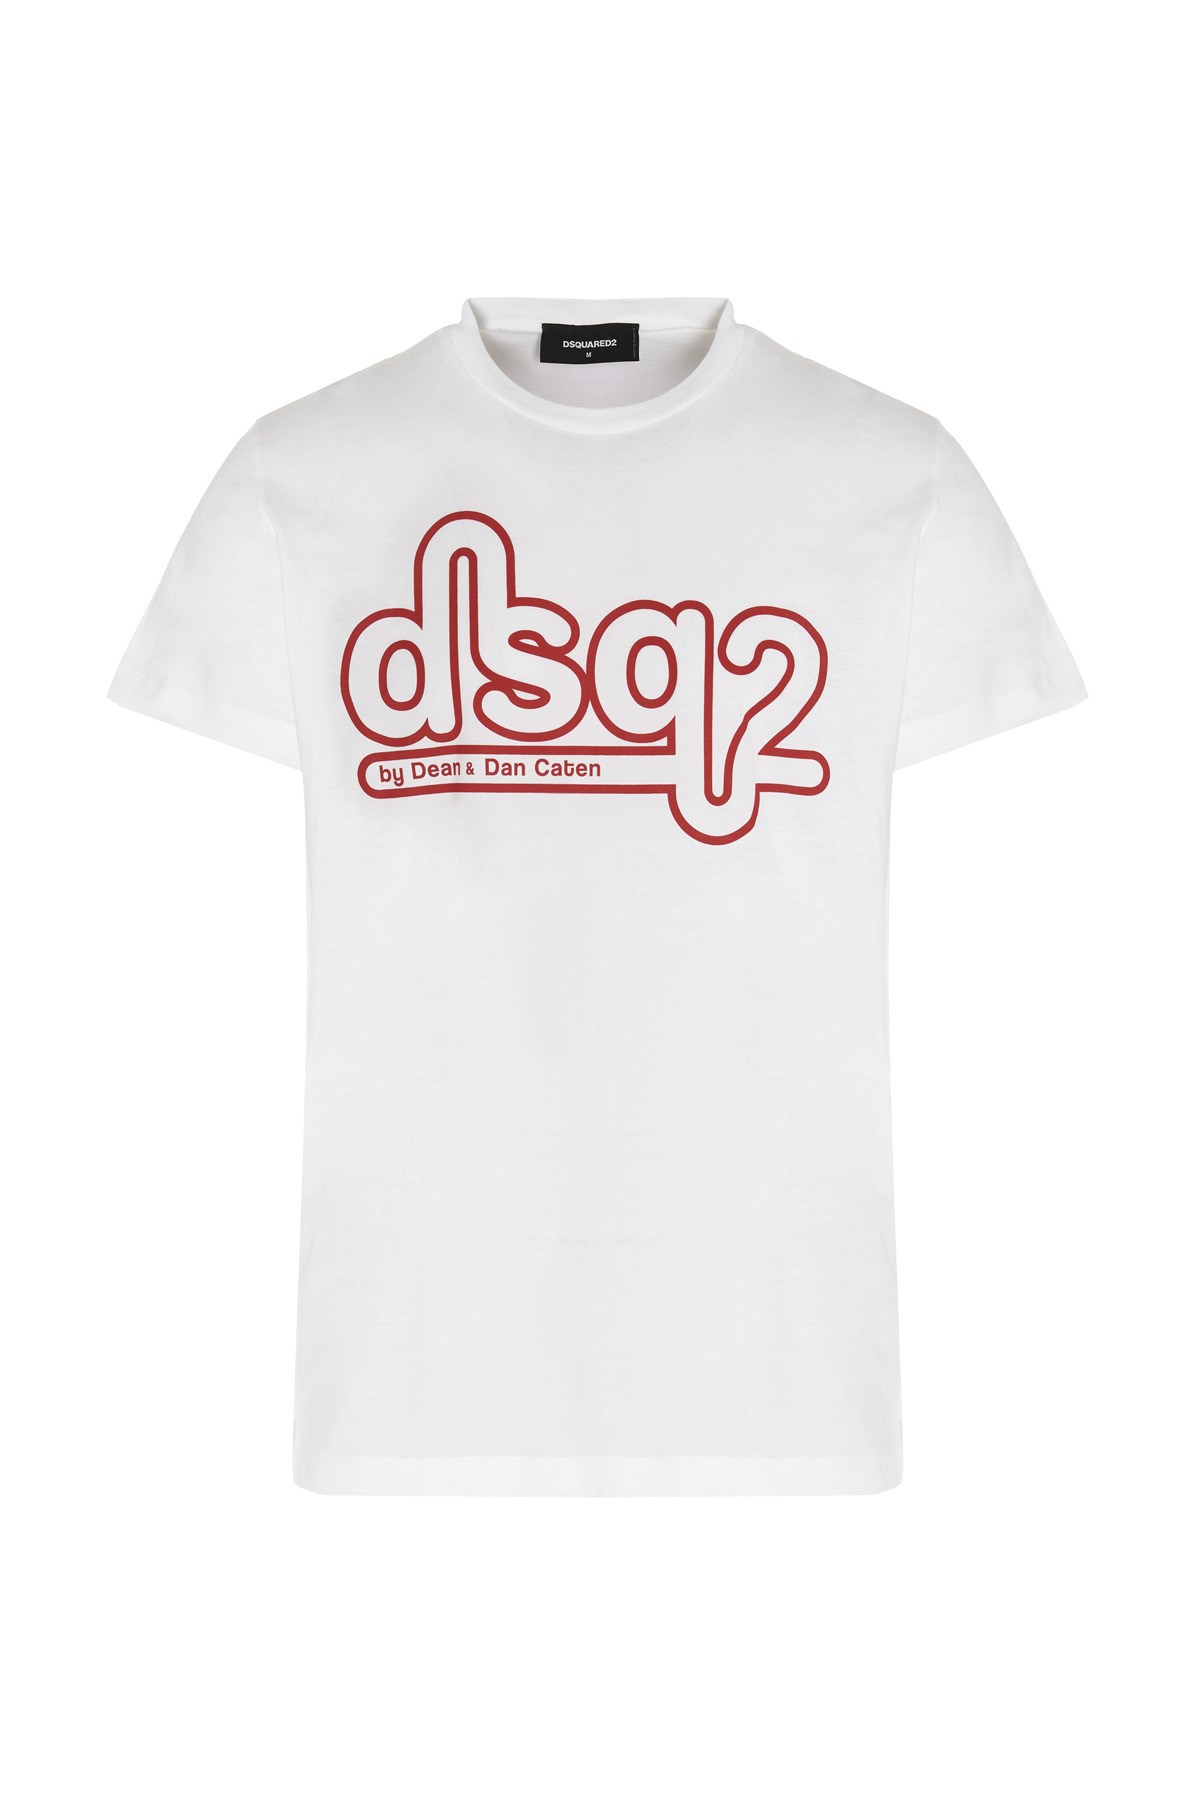 DSQUARED2 Dsq2' T-Shirt